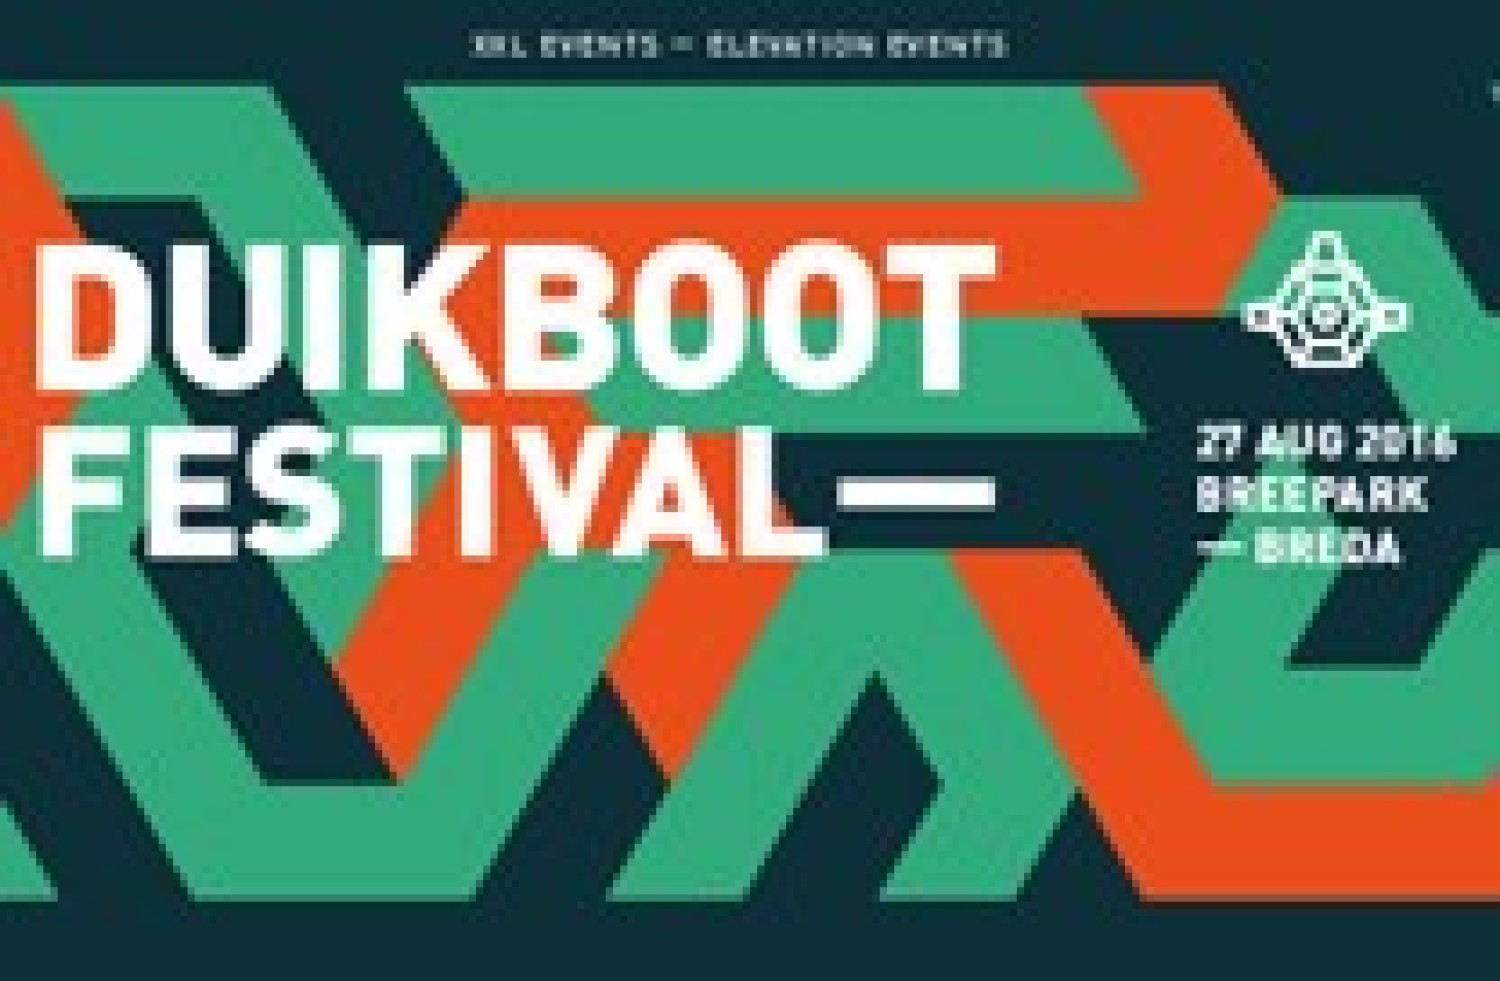 Party report: Duikboot festival, Breda (27-08-2016)